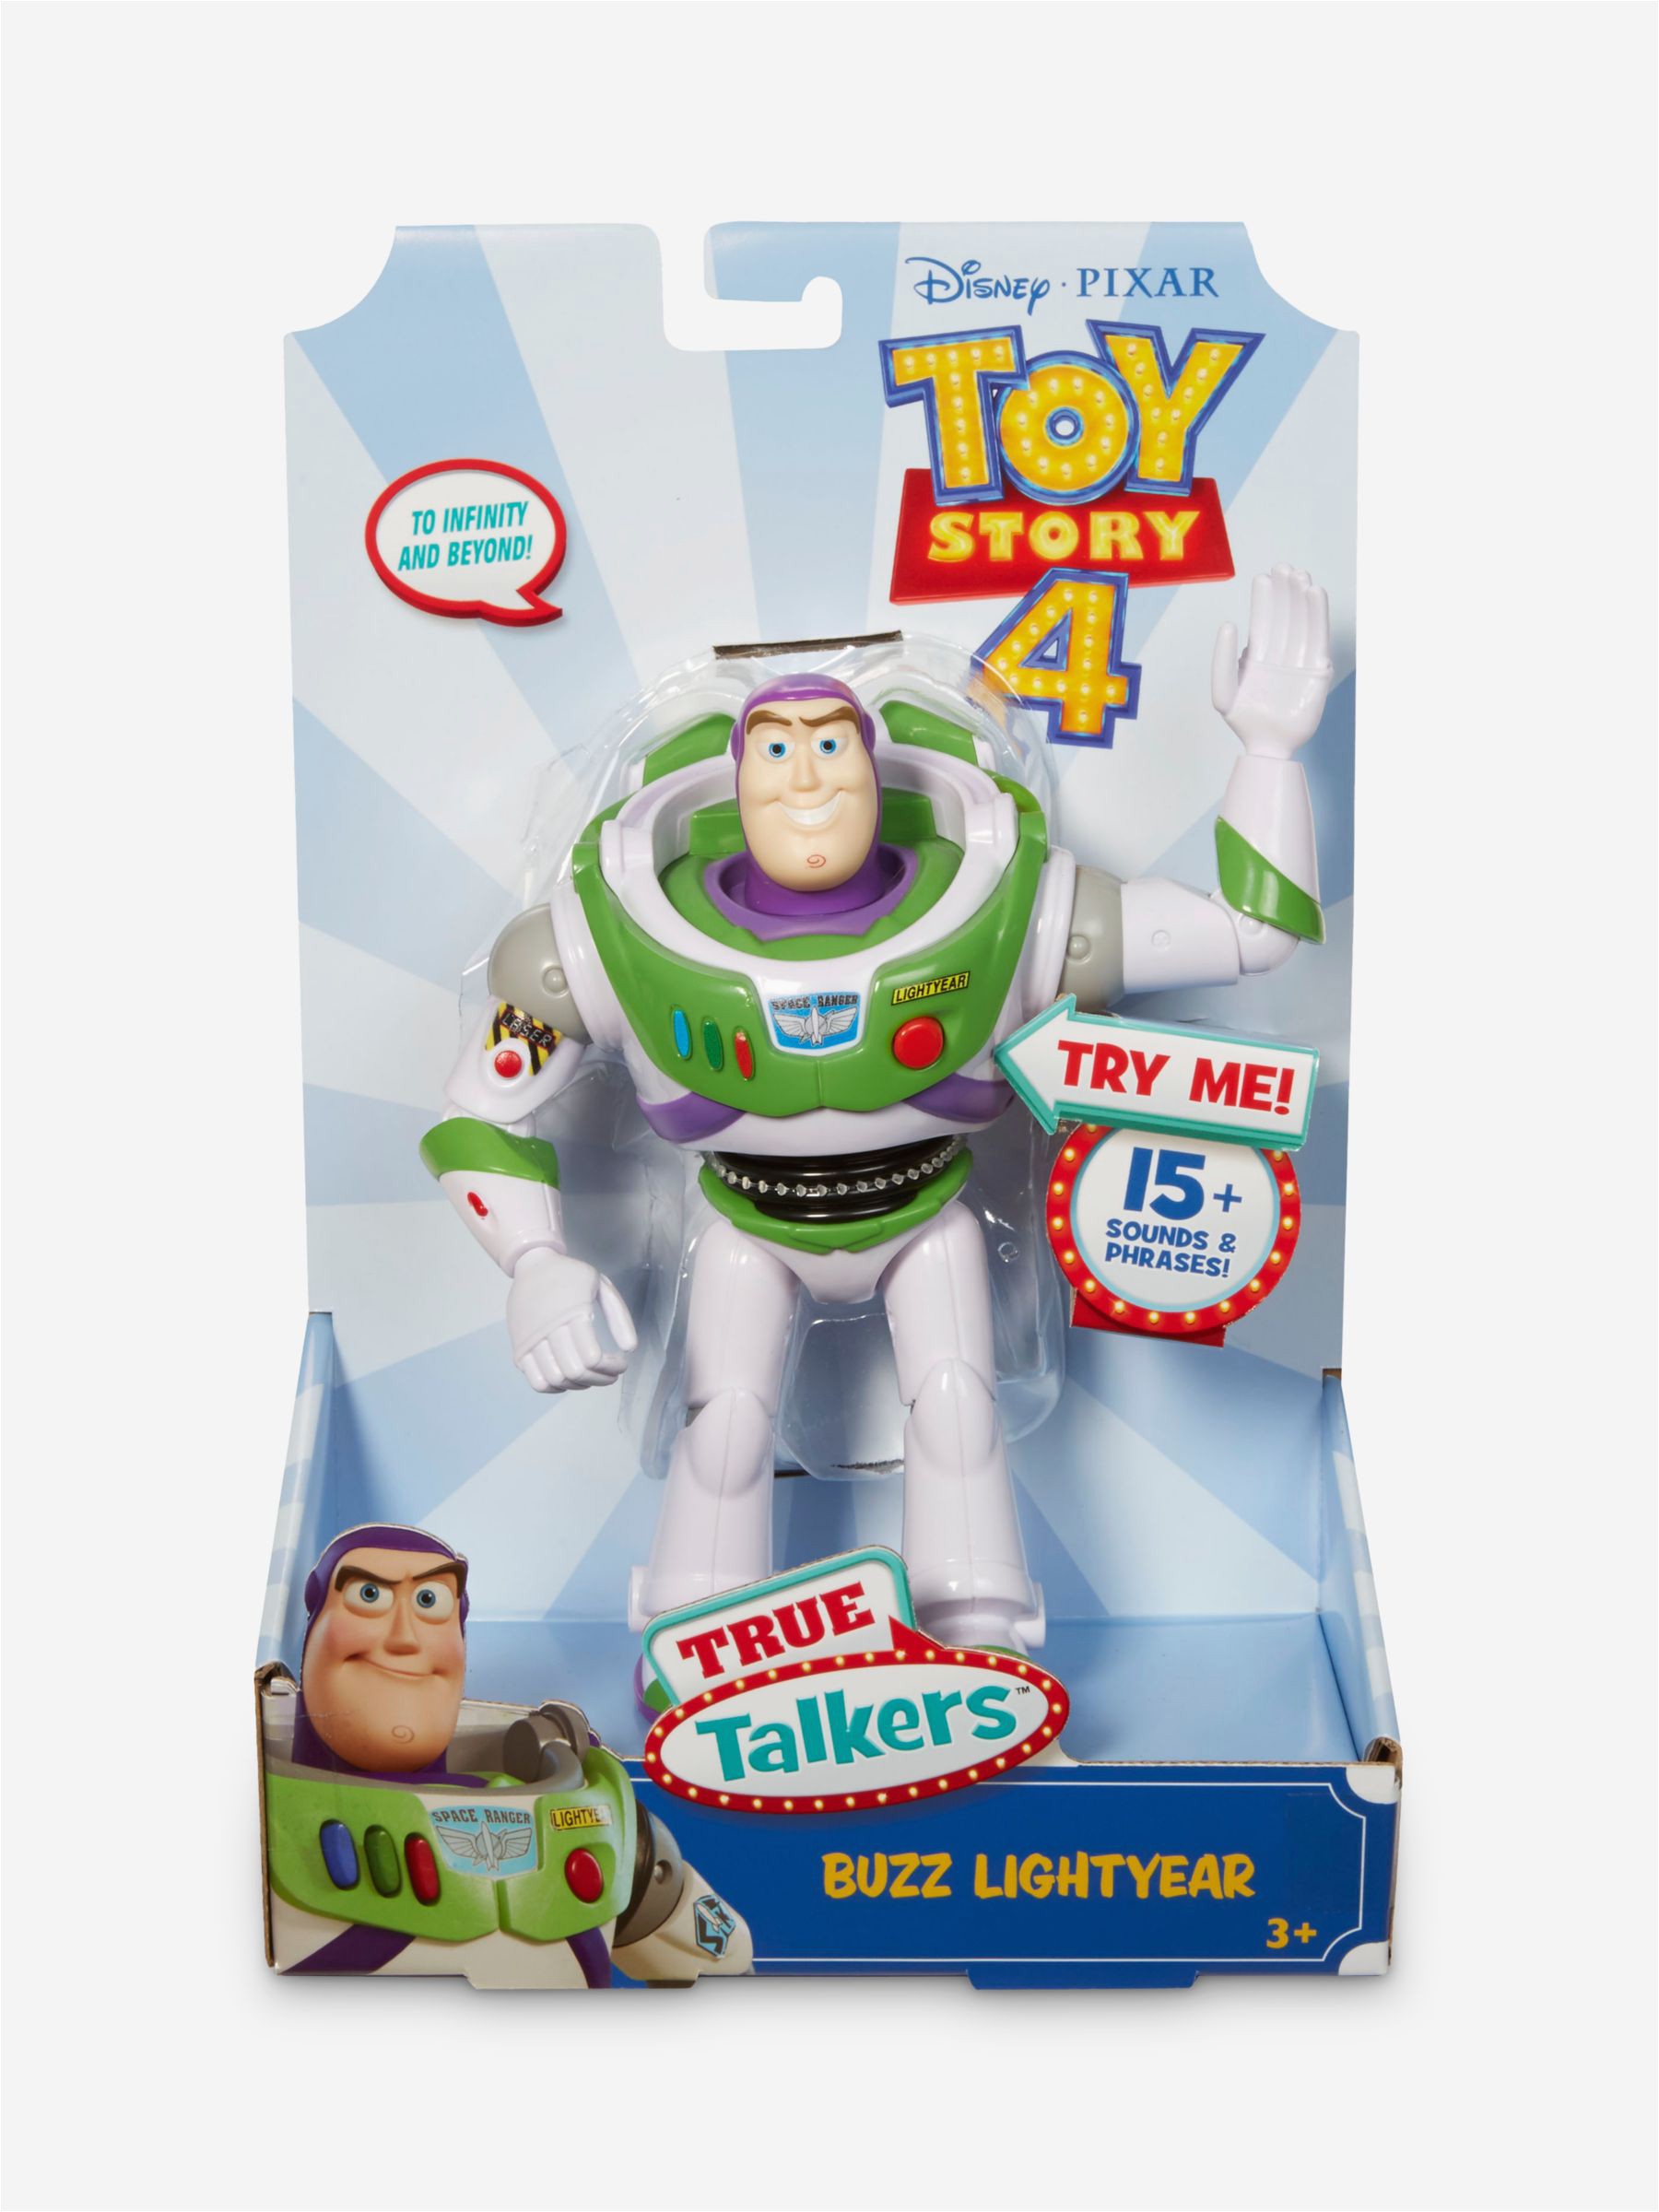 Toy Story Bathroom Rug Disney Pixar toy Story 4 True Talkers Buzz Lightyear Figure